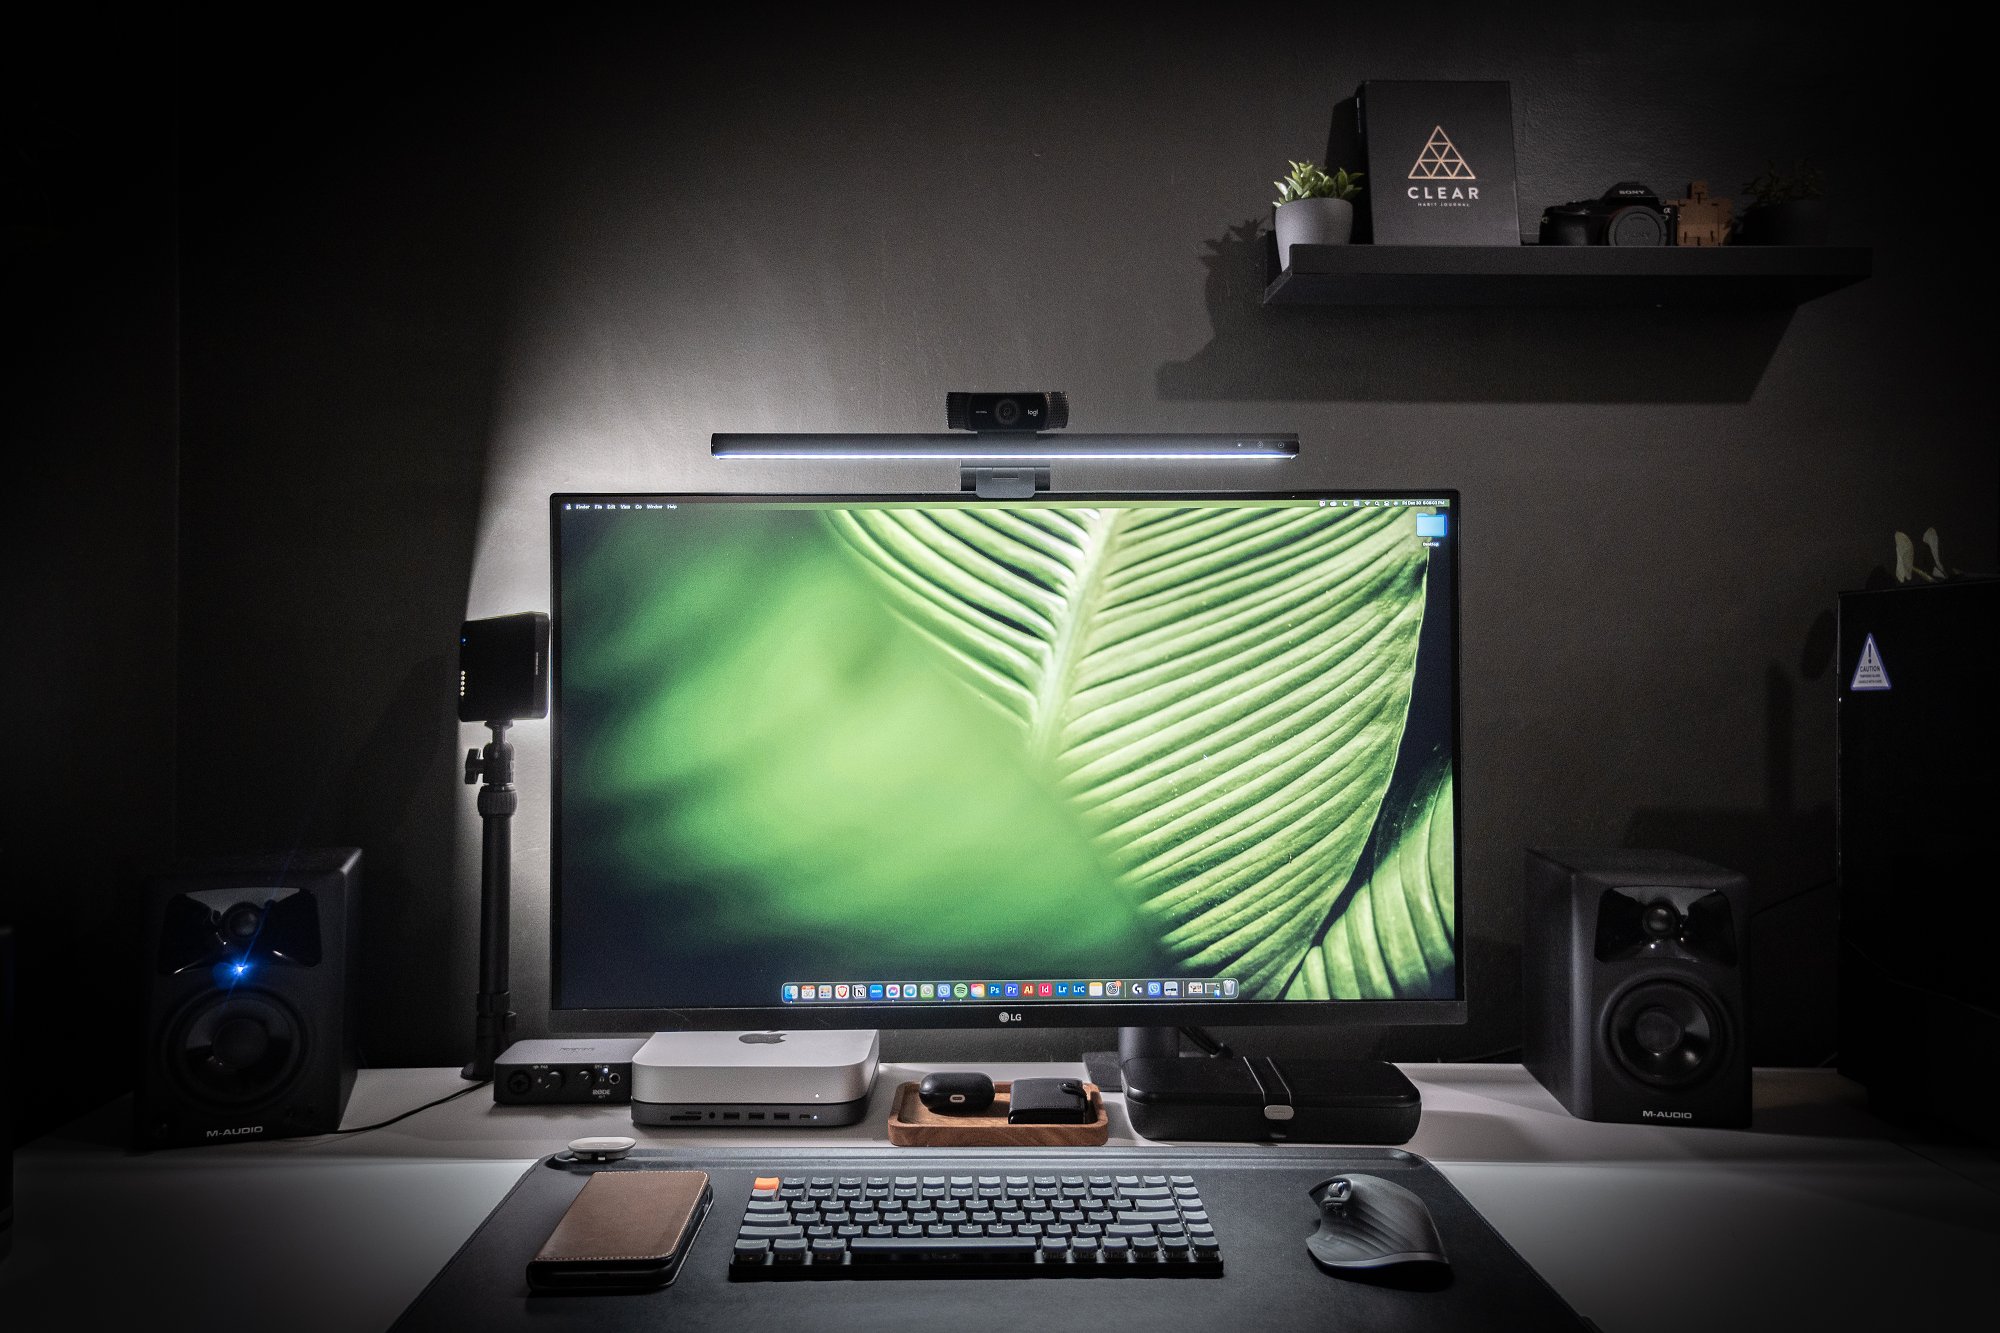 A moody home office desk setup, featuring an LG monitor, Keychron K3 mechanical keyboard, Logitech MX Master 3 mouse, M-Audio AV42 speakers